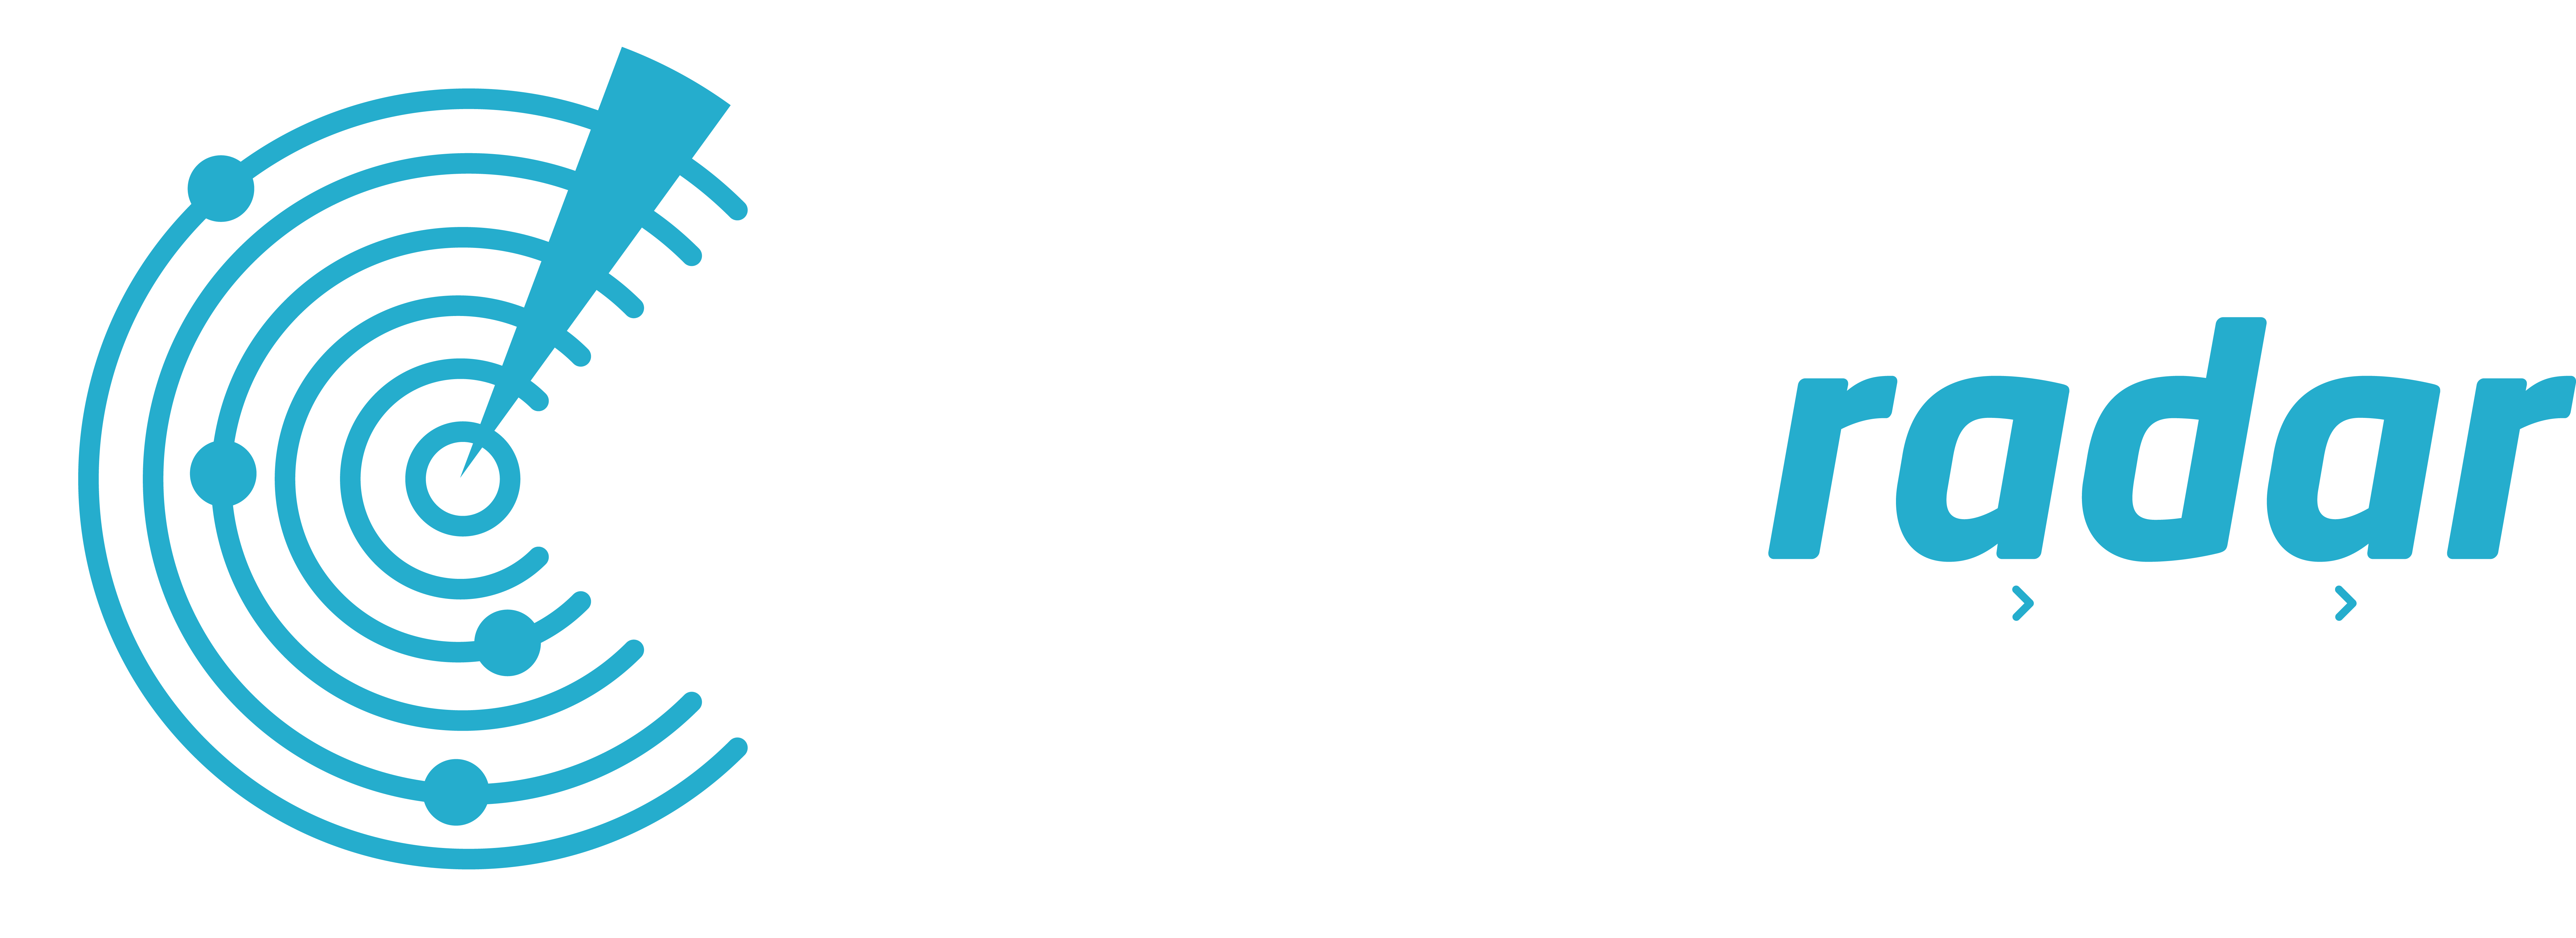 comply-radar-aml-compliance-logo